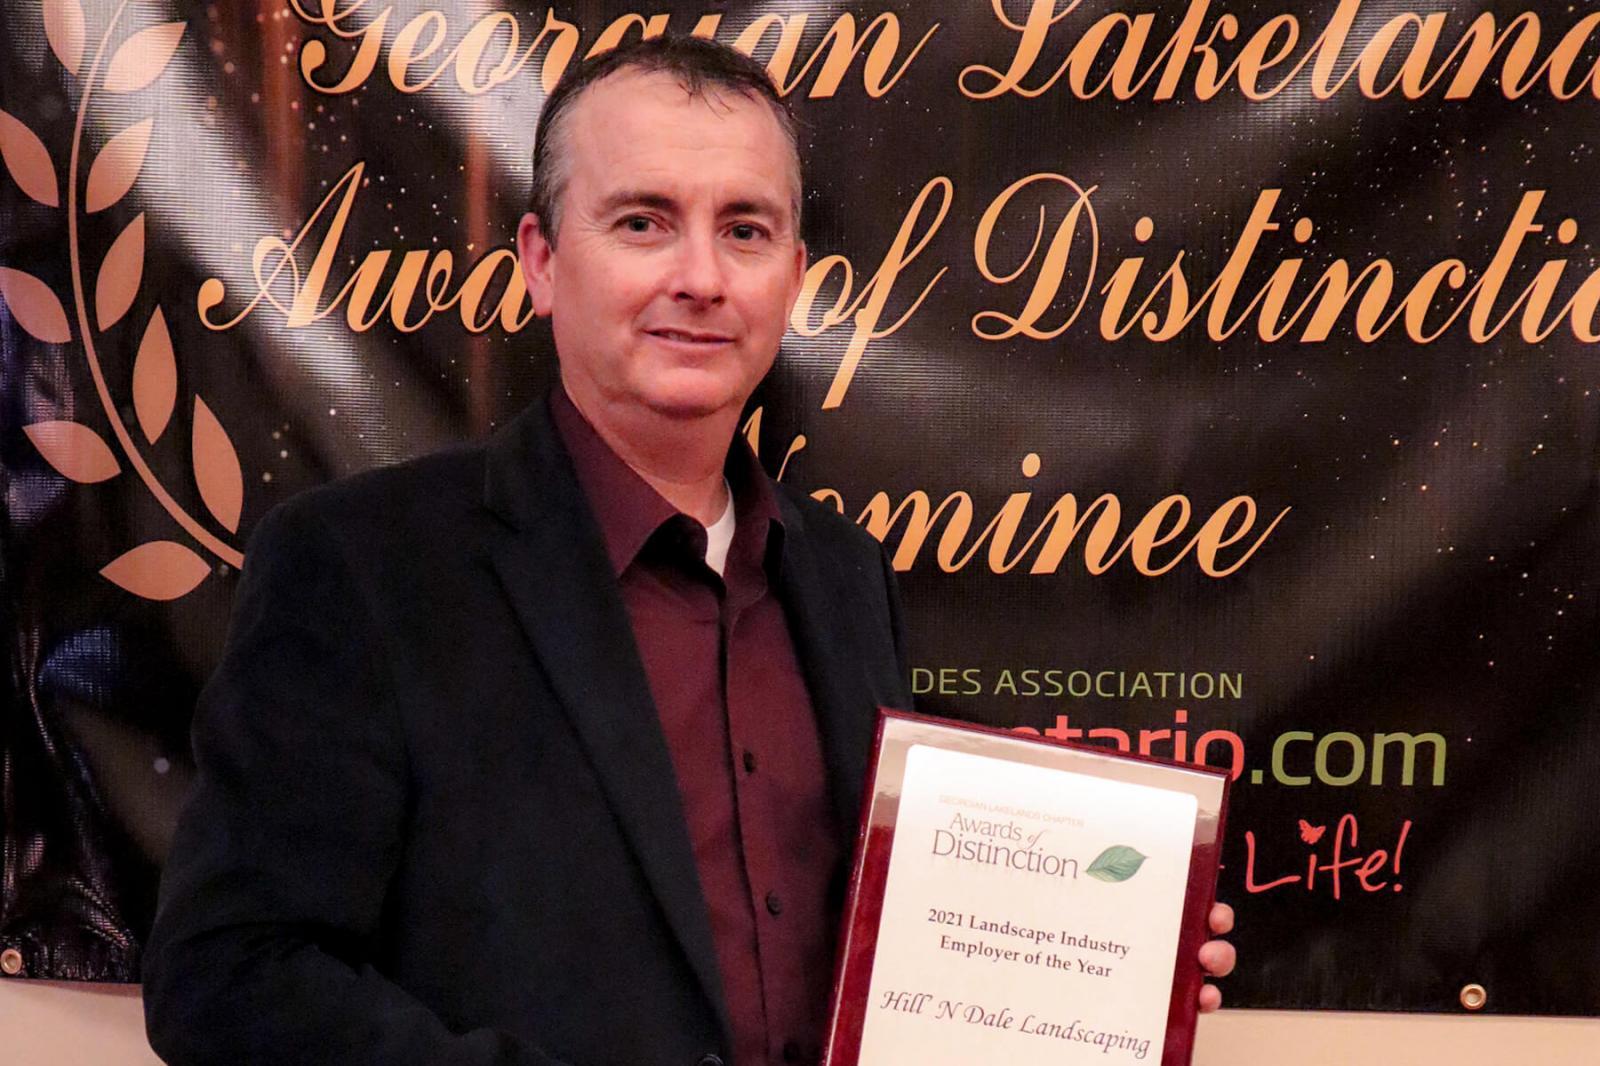 Georgian Lakelands awards celebrate 25 years of history